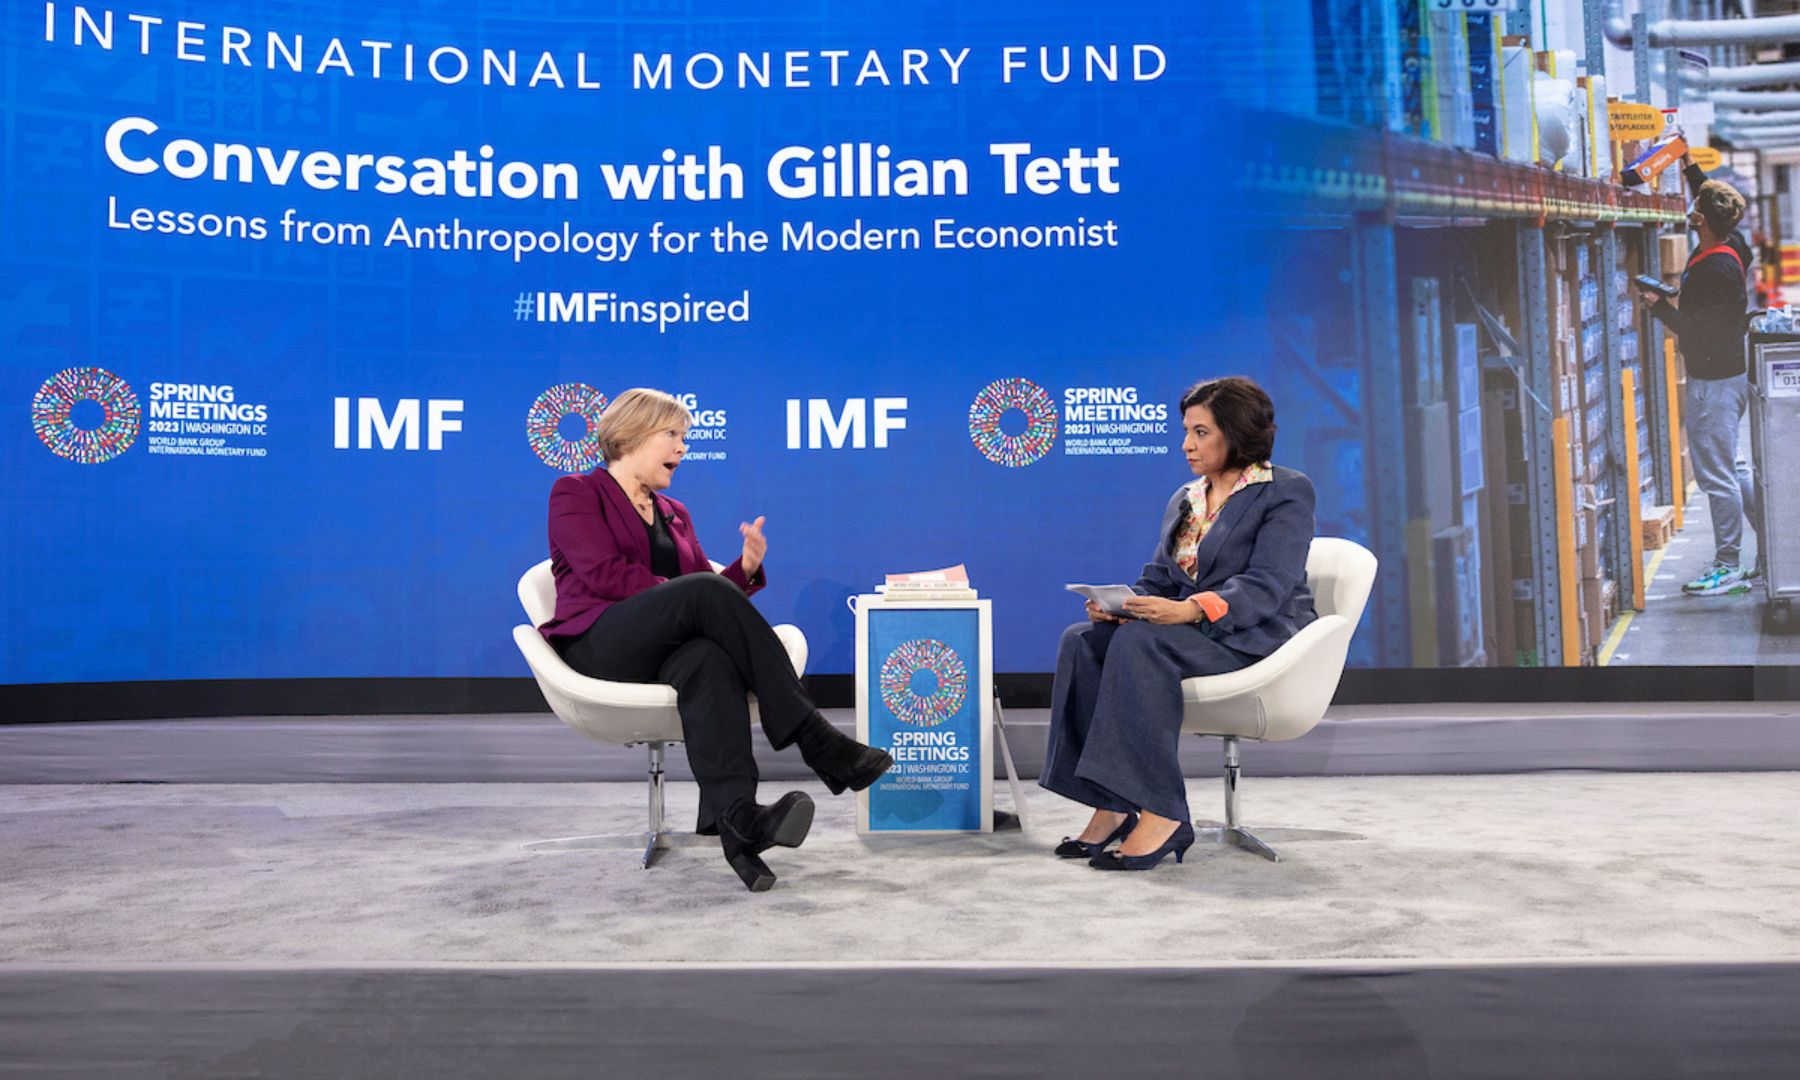 IMF inspired with Gillian Tett